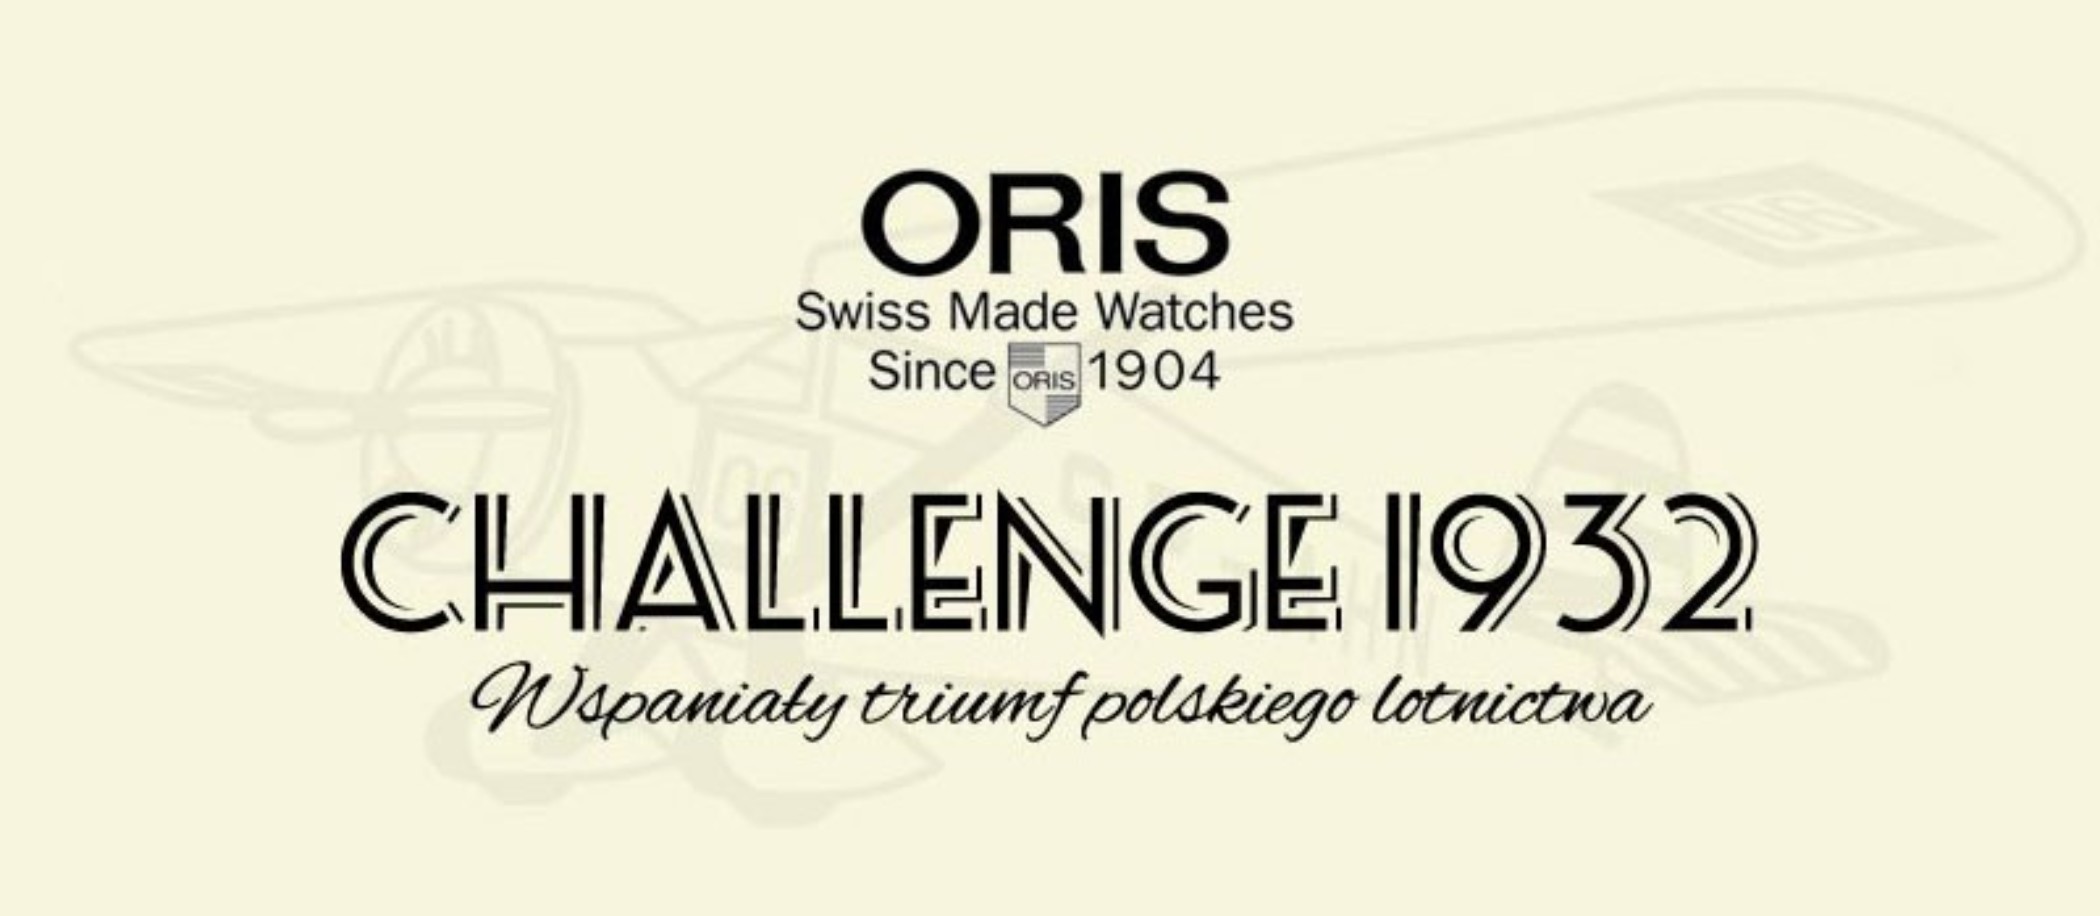 ORIS Challenge 1932